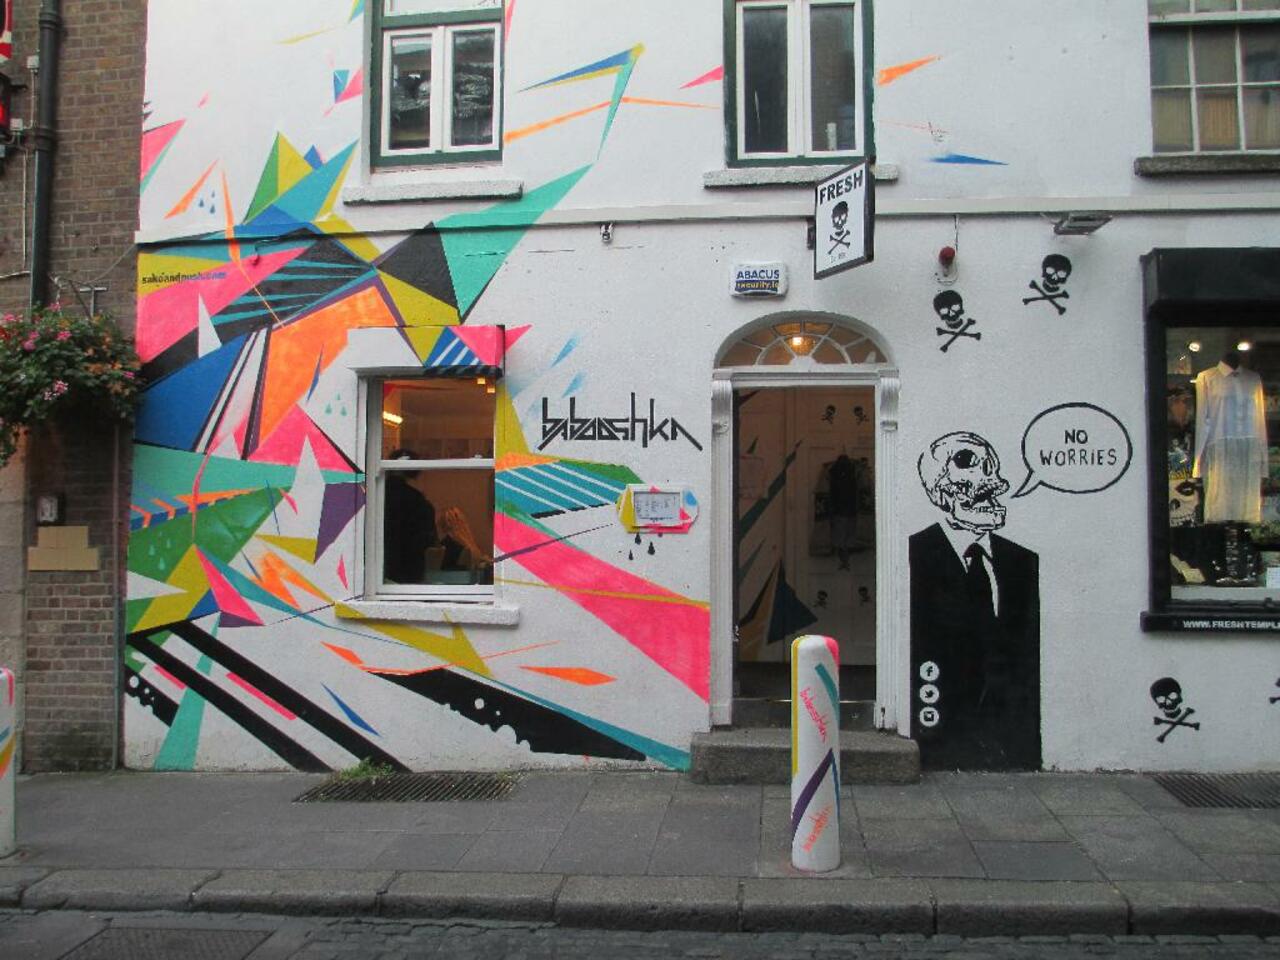 A few more street art pics from Dublin. It's a great city. #streetart #dublin #graffiti http://t.co/qwAaDZm9xm